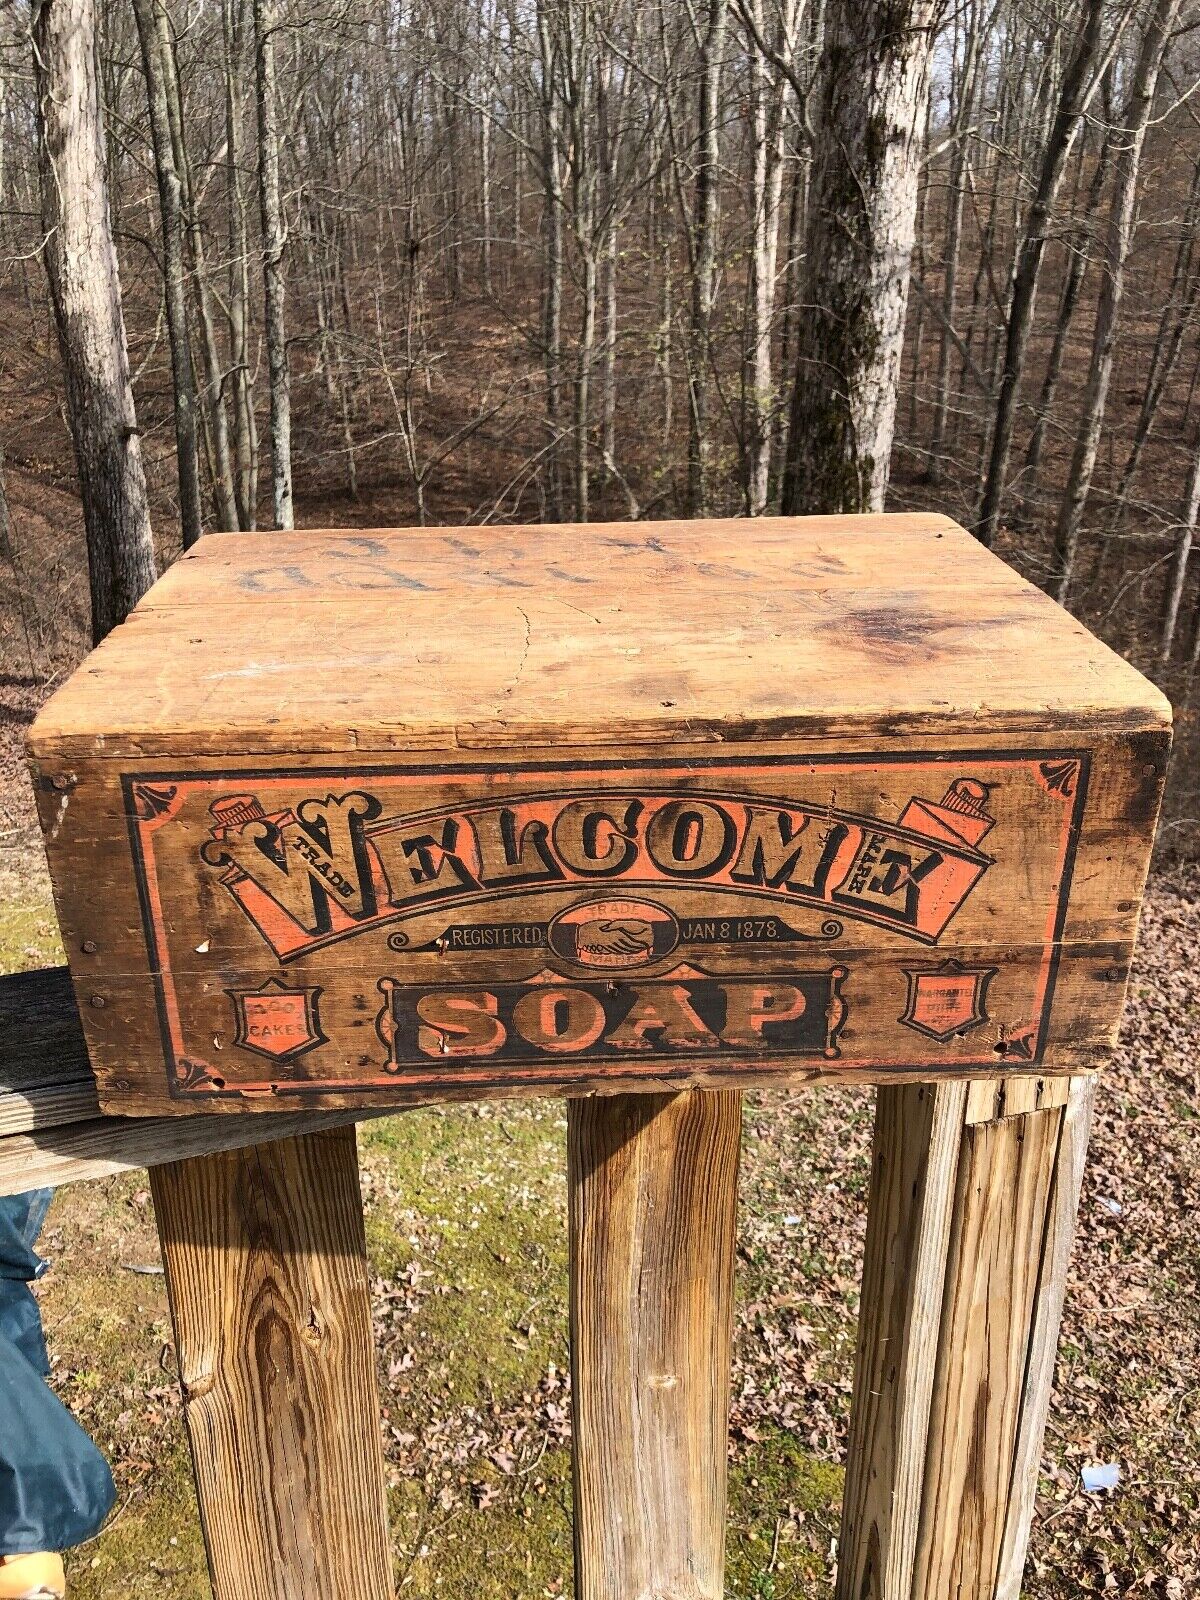 Rare Antique Welcome Soap Wooden Box Curtis Davis & Co. Boston, Mass.